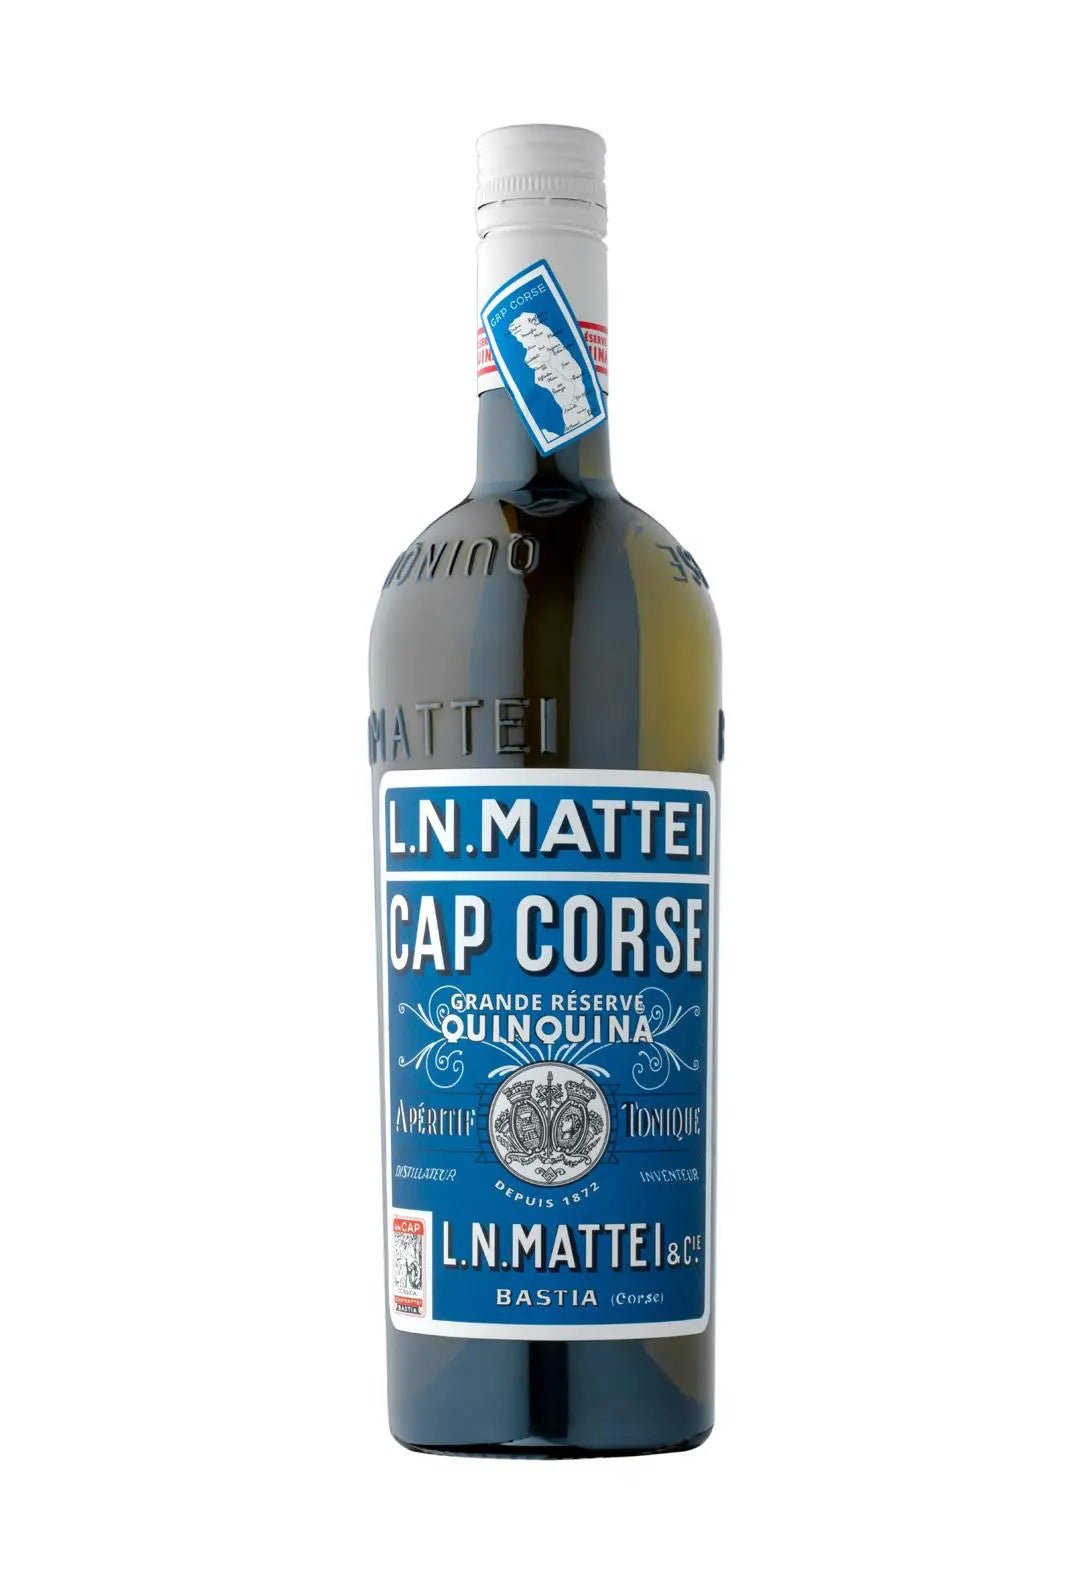 L.N. Mattei Cap Corse Quinquina Blanc 17% 750ml - Aperitif - Liquor Wine Cave